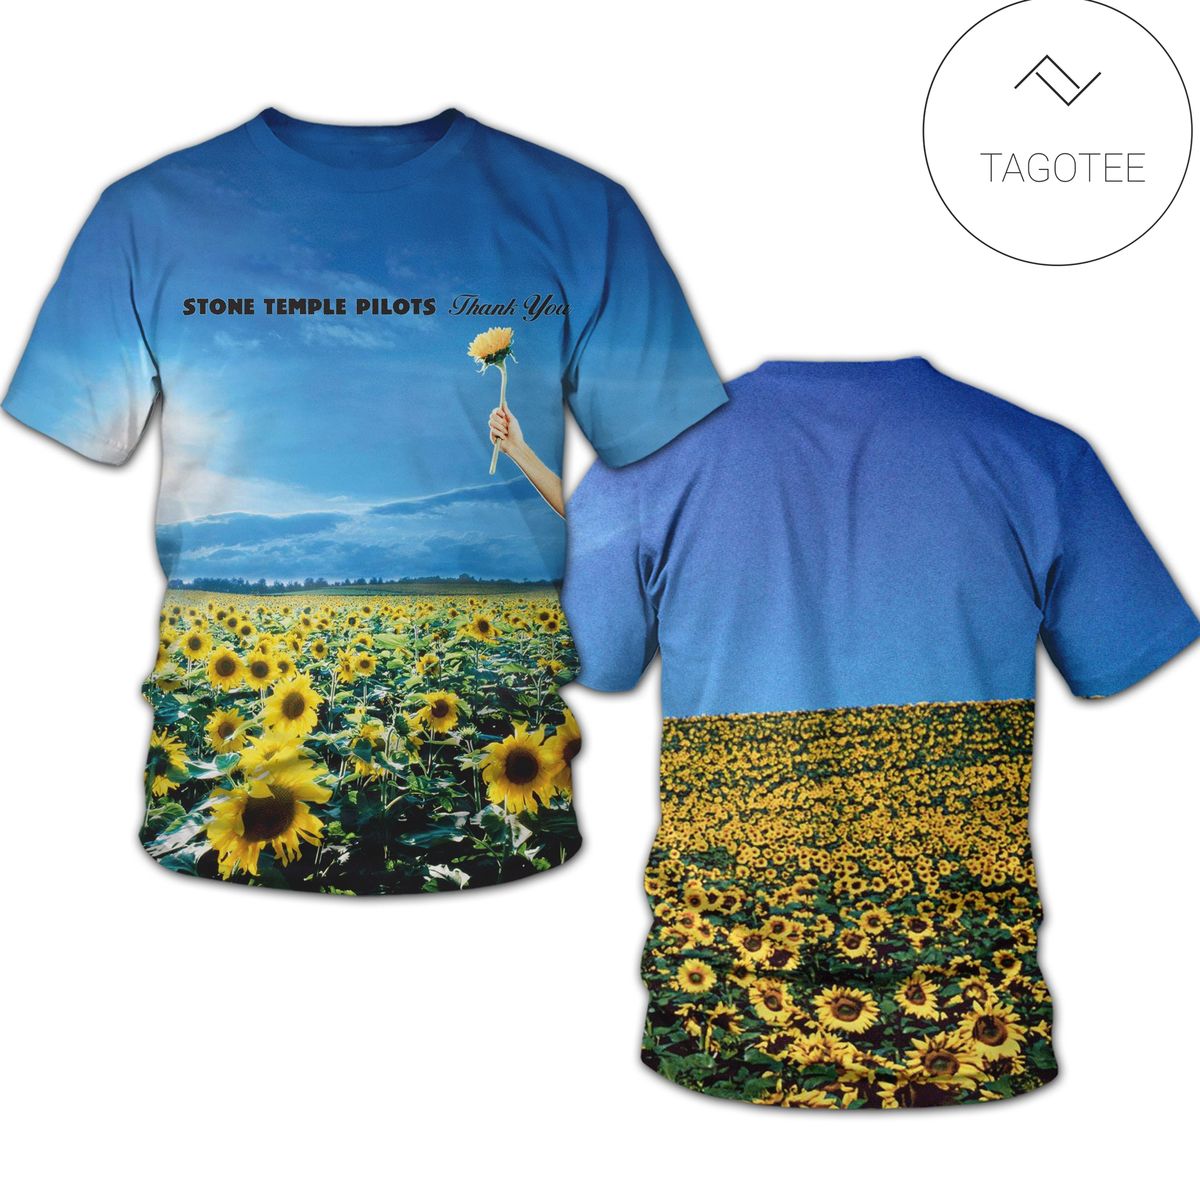 Stone Temple Pilots Thank You Album Cover Shirt